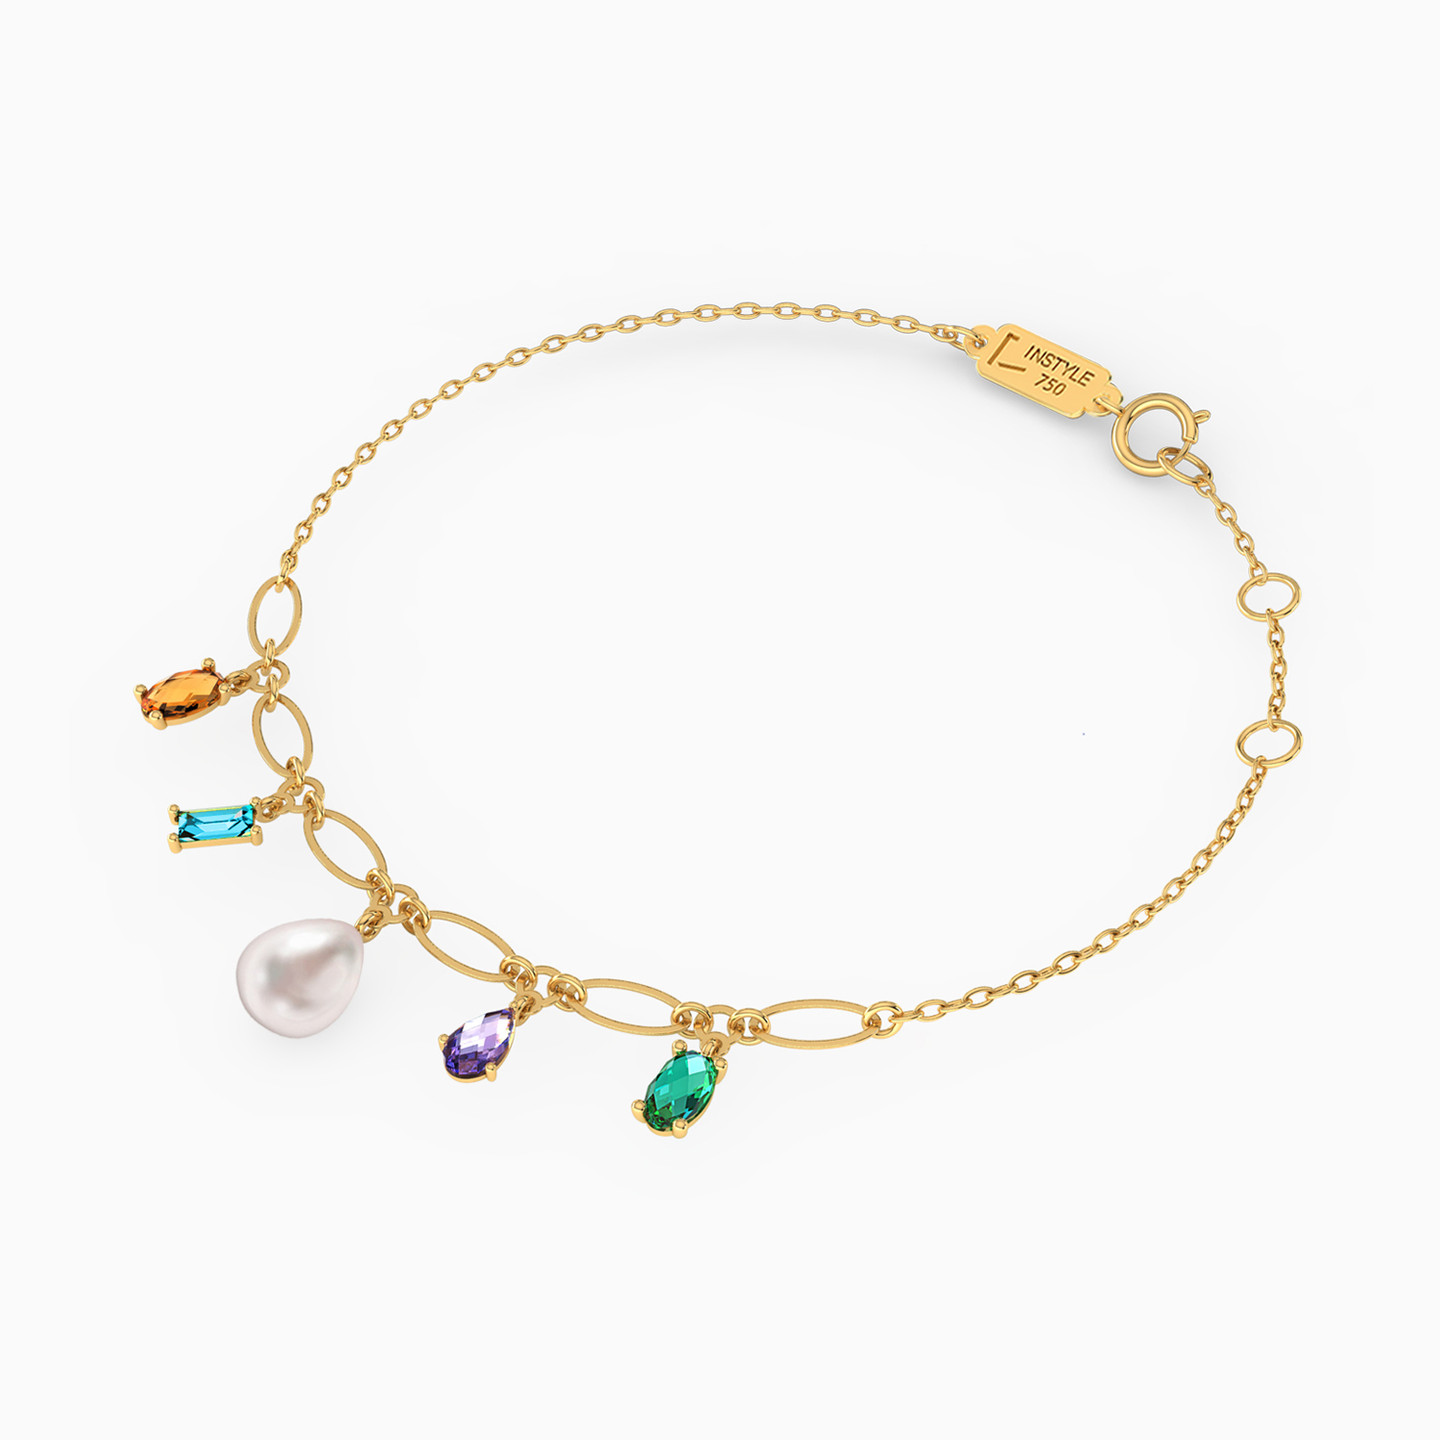 18K Gold Pearls & Colored Stones Charm Bracelet - 2